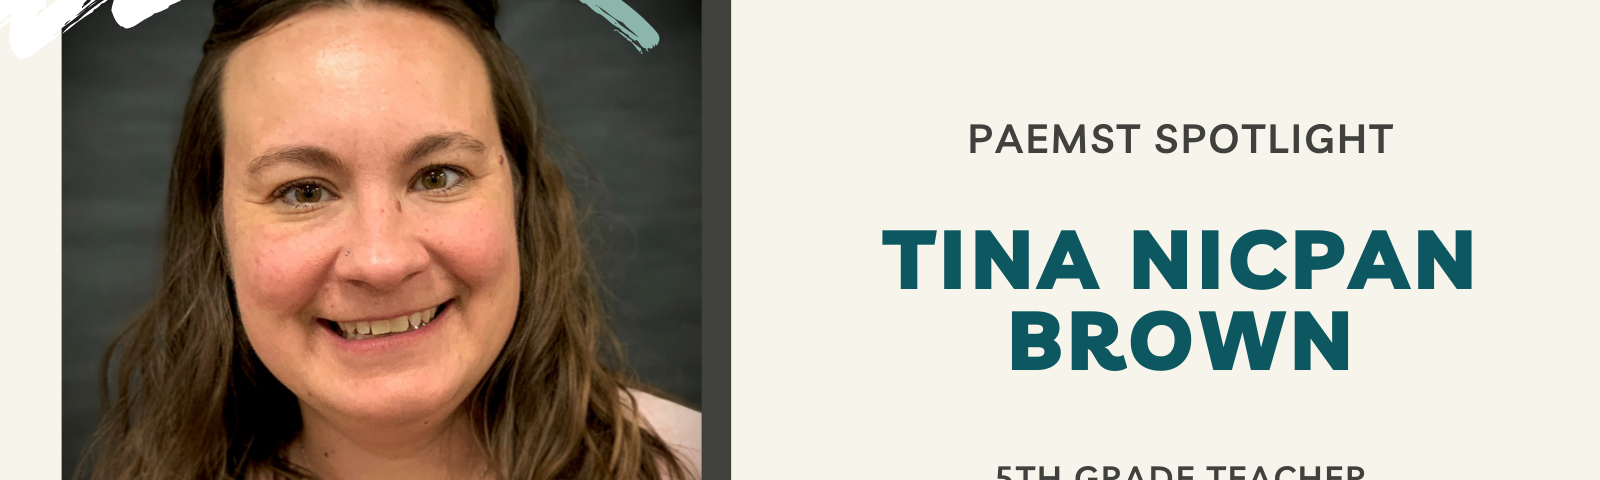 PAEMST Spotlight: Tina Nicpan Brown, 5th Grade Teacher, Lincoln Elementary, Wenatchee School District